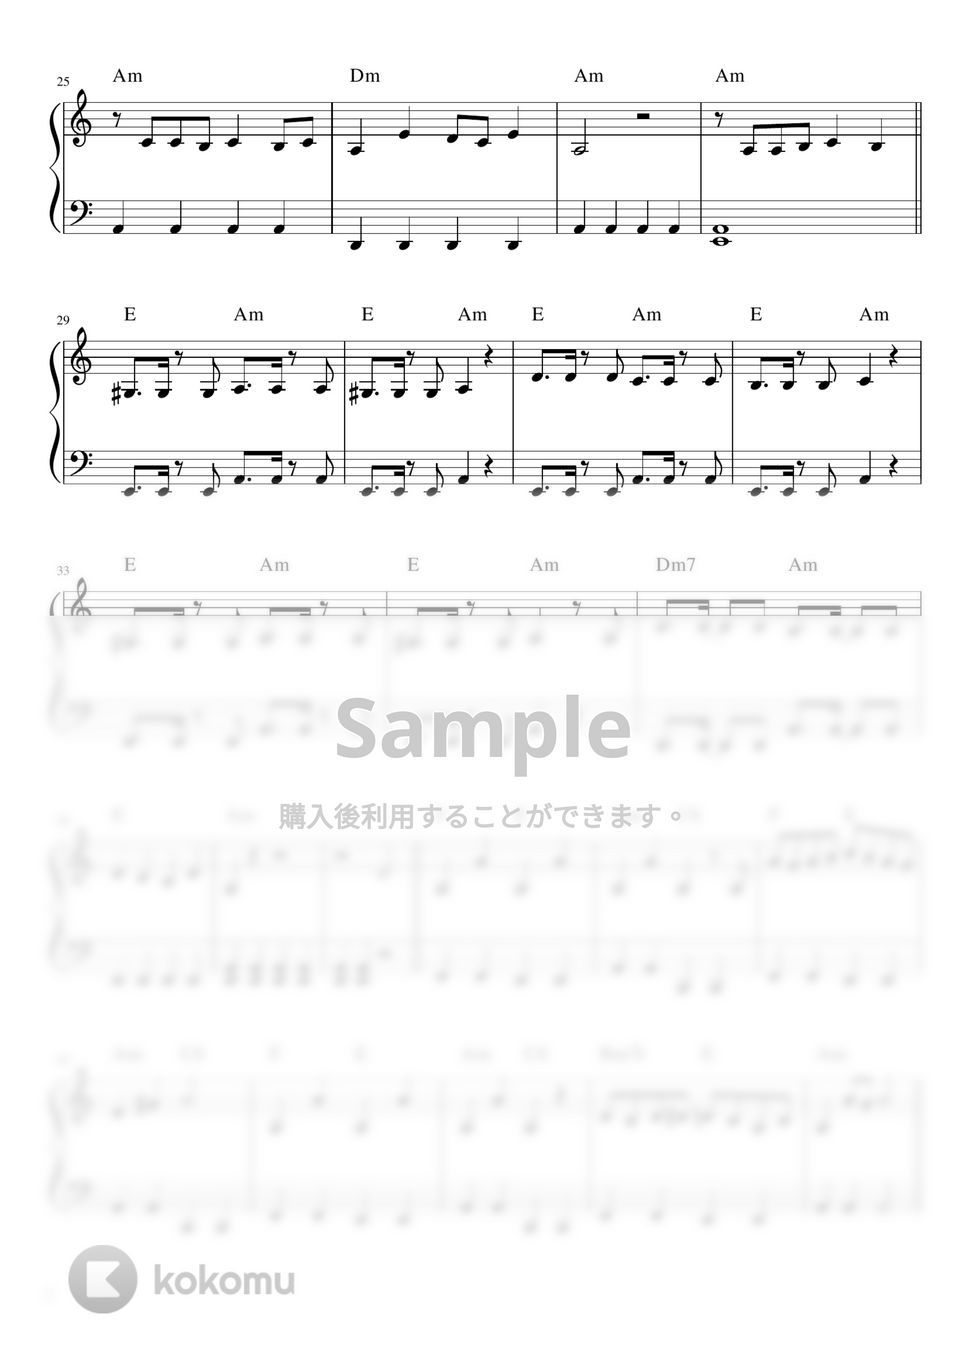 Ado - うっせぇわ (初級 / 簡単 / レッスン / コード付き / 歌詞付き) by orinpia music